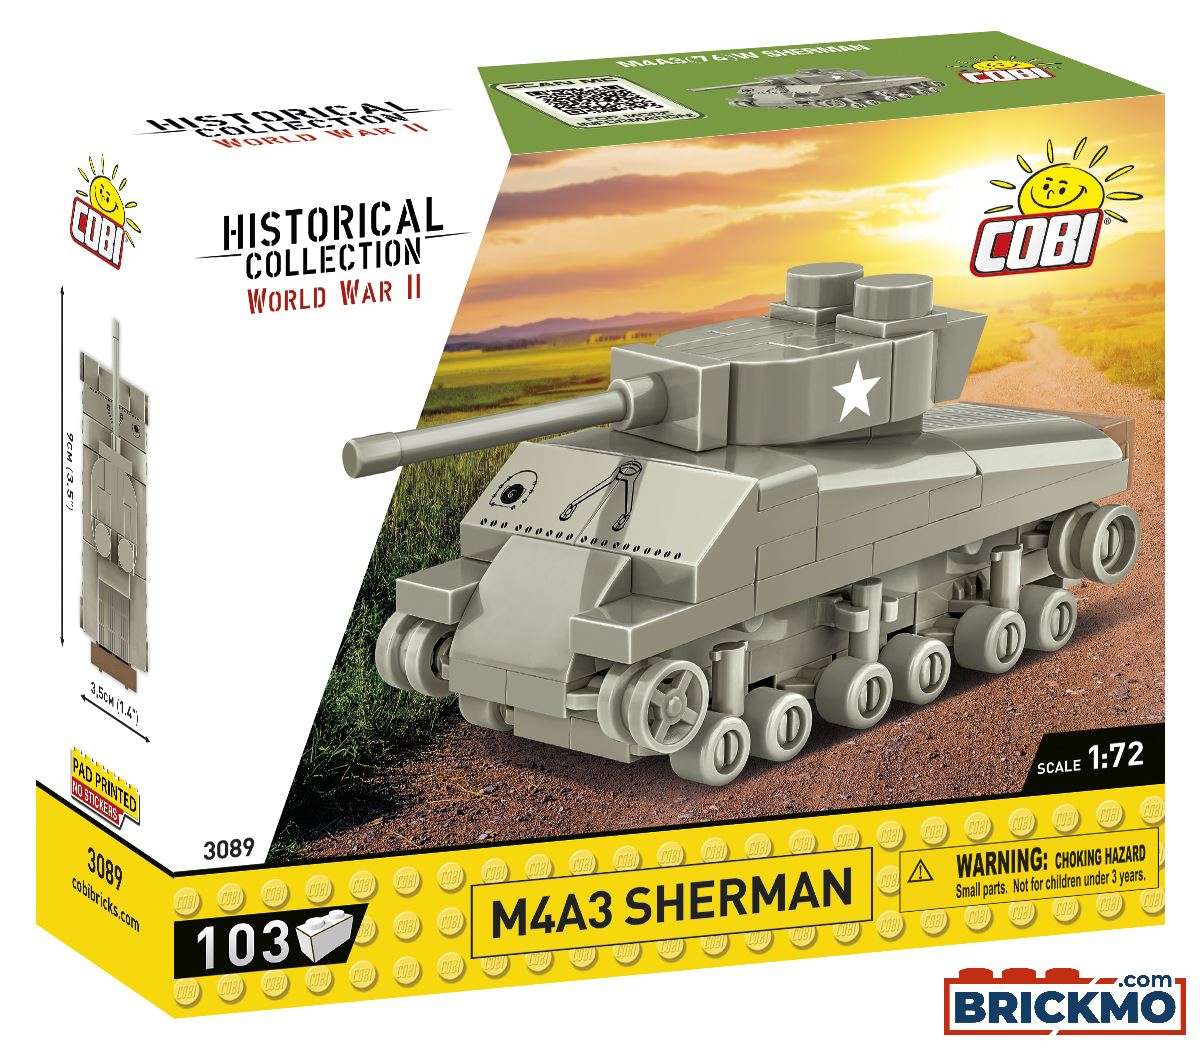 Cobi Historical Collection World War II 3089 Sherman M4A3 3089